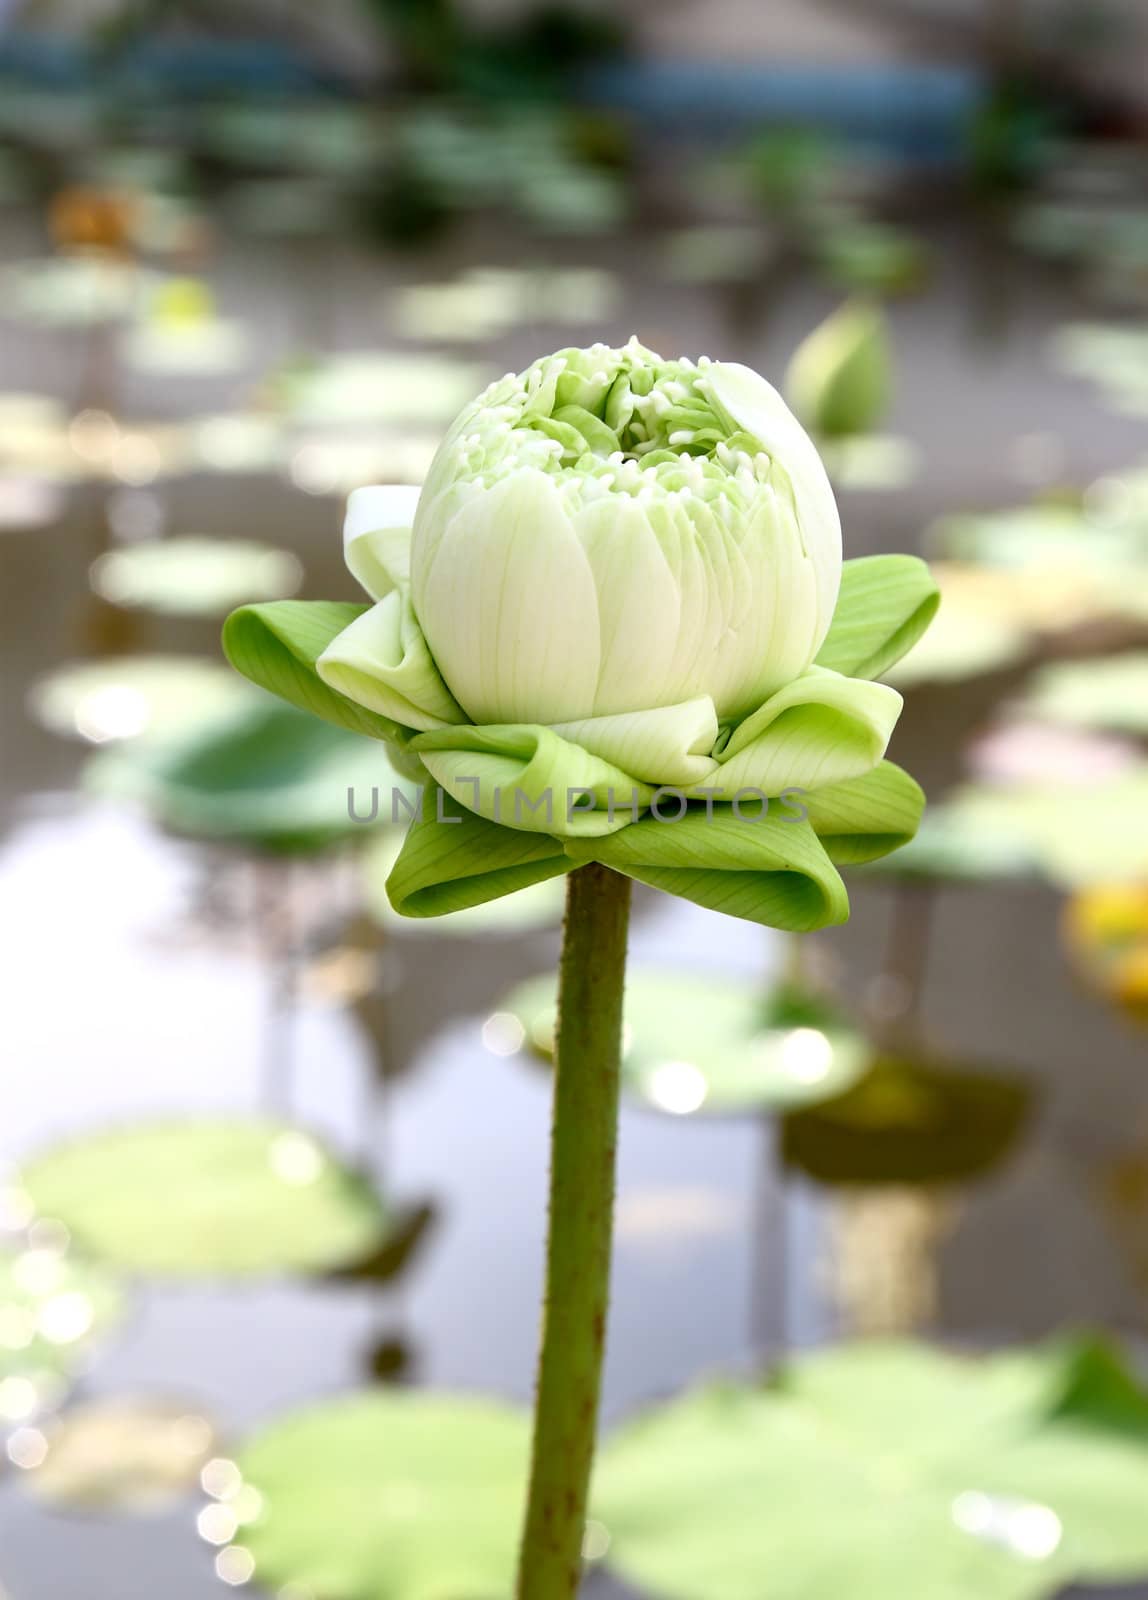 Bud of The Lotus Flower